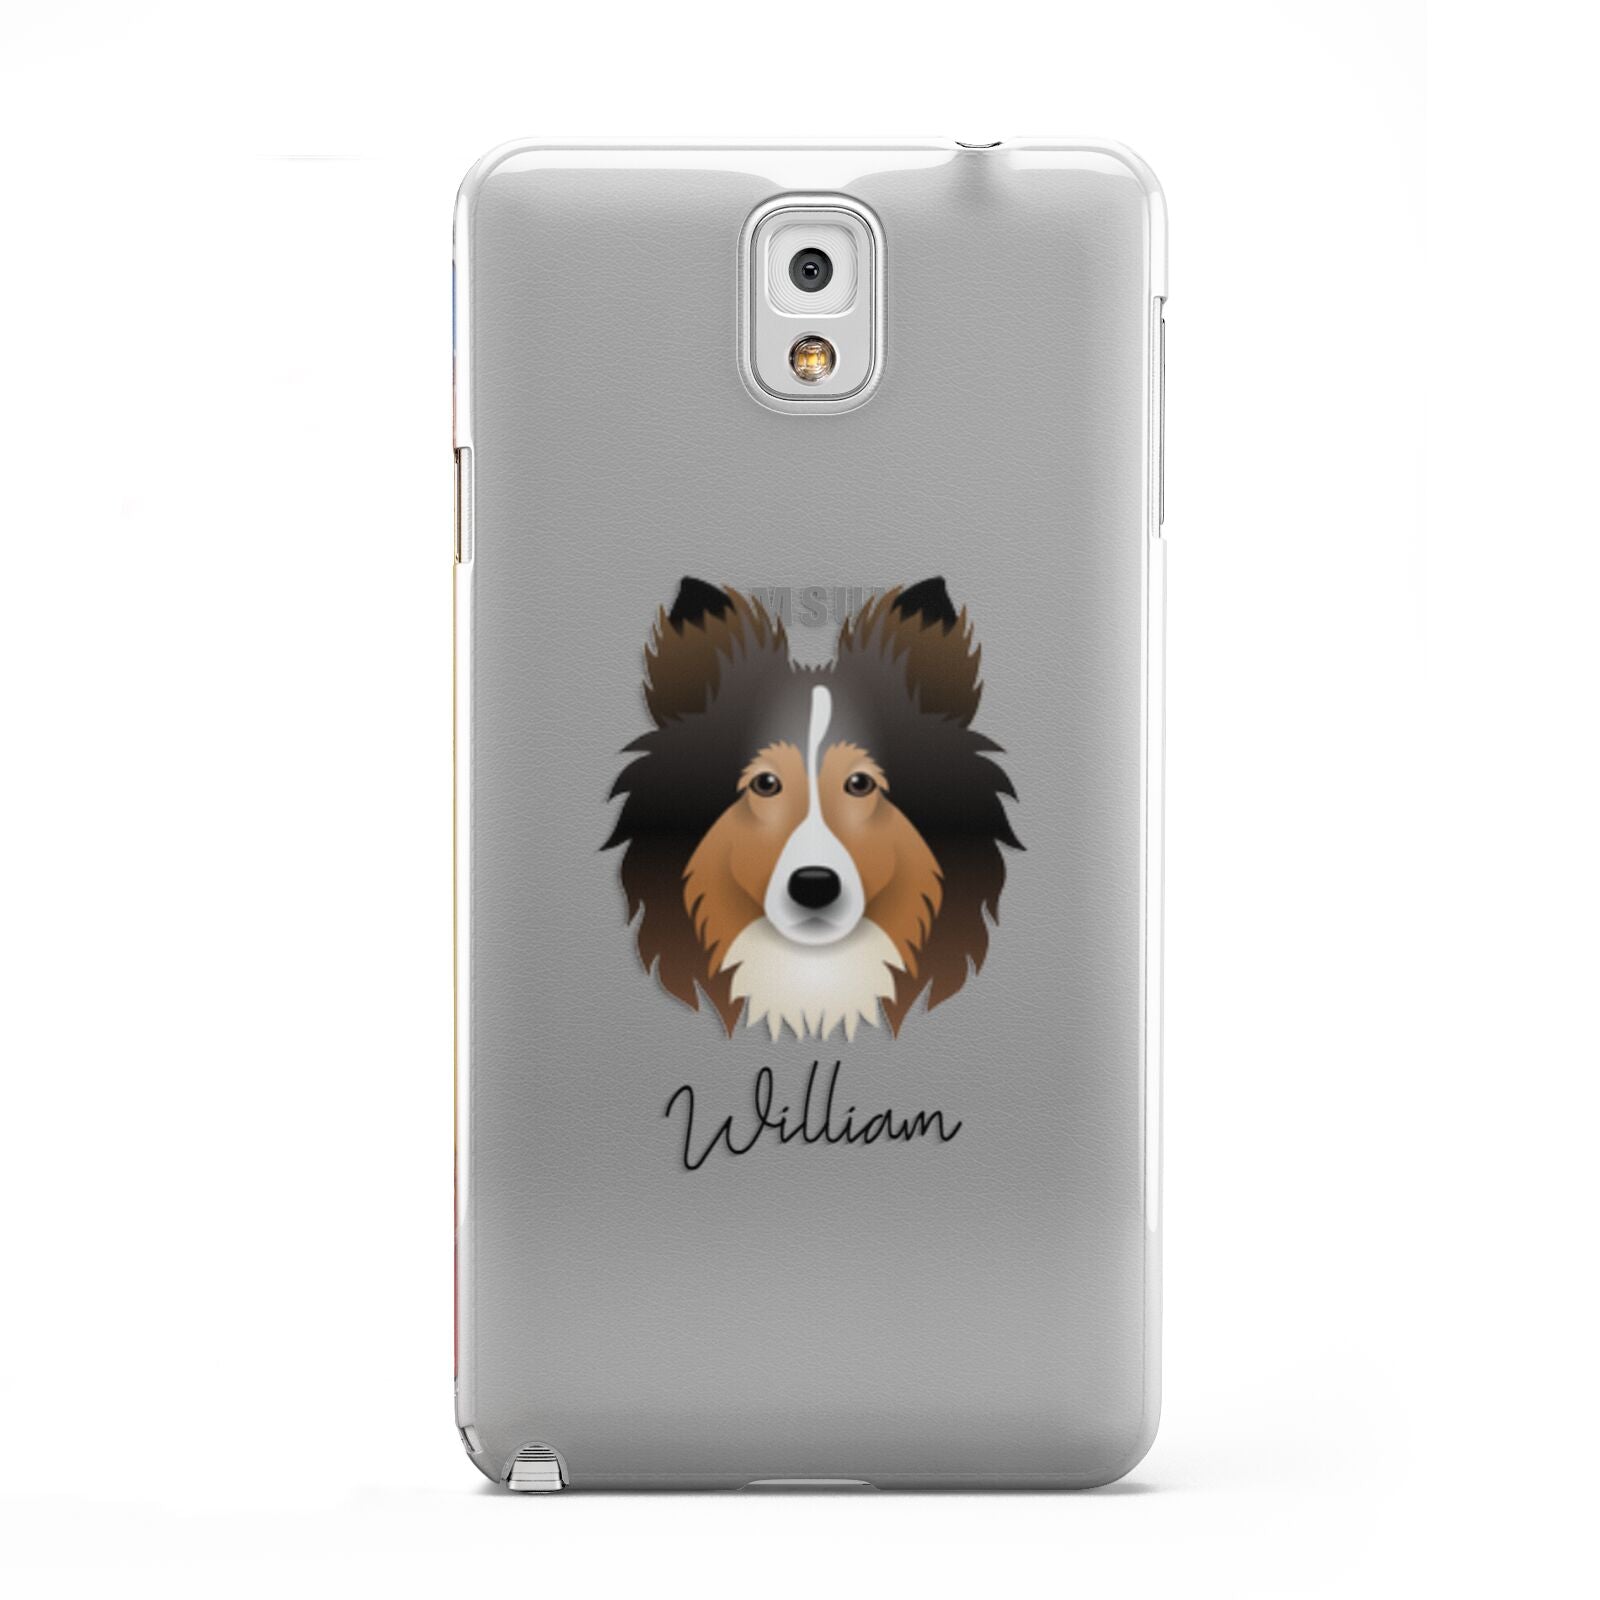 Shetland Sheepdog Personalised Samsung Galaxy Note 3 Case